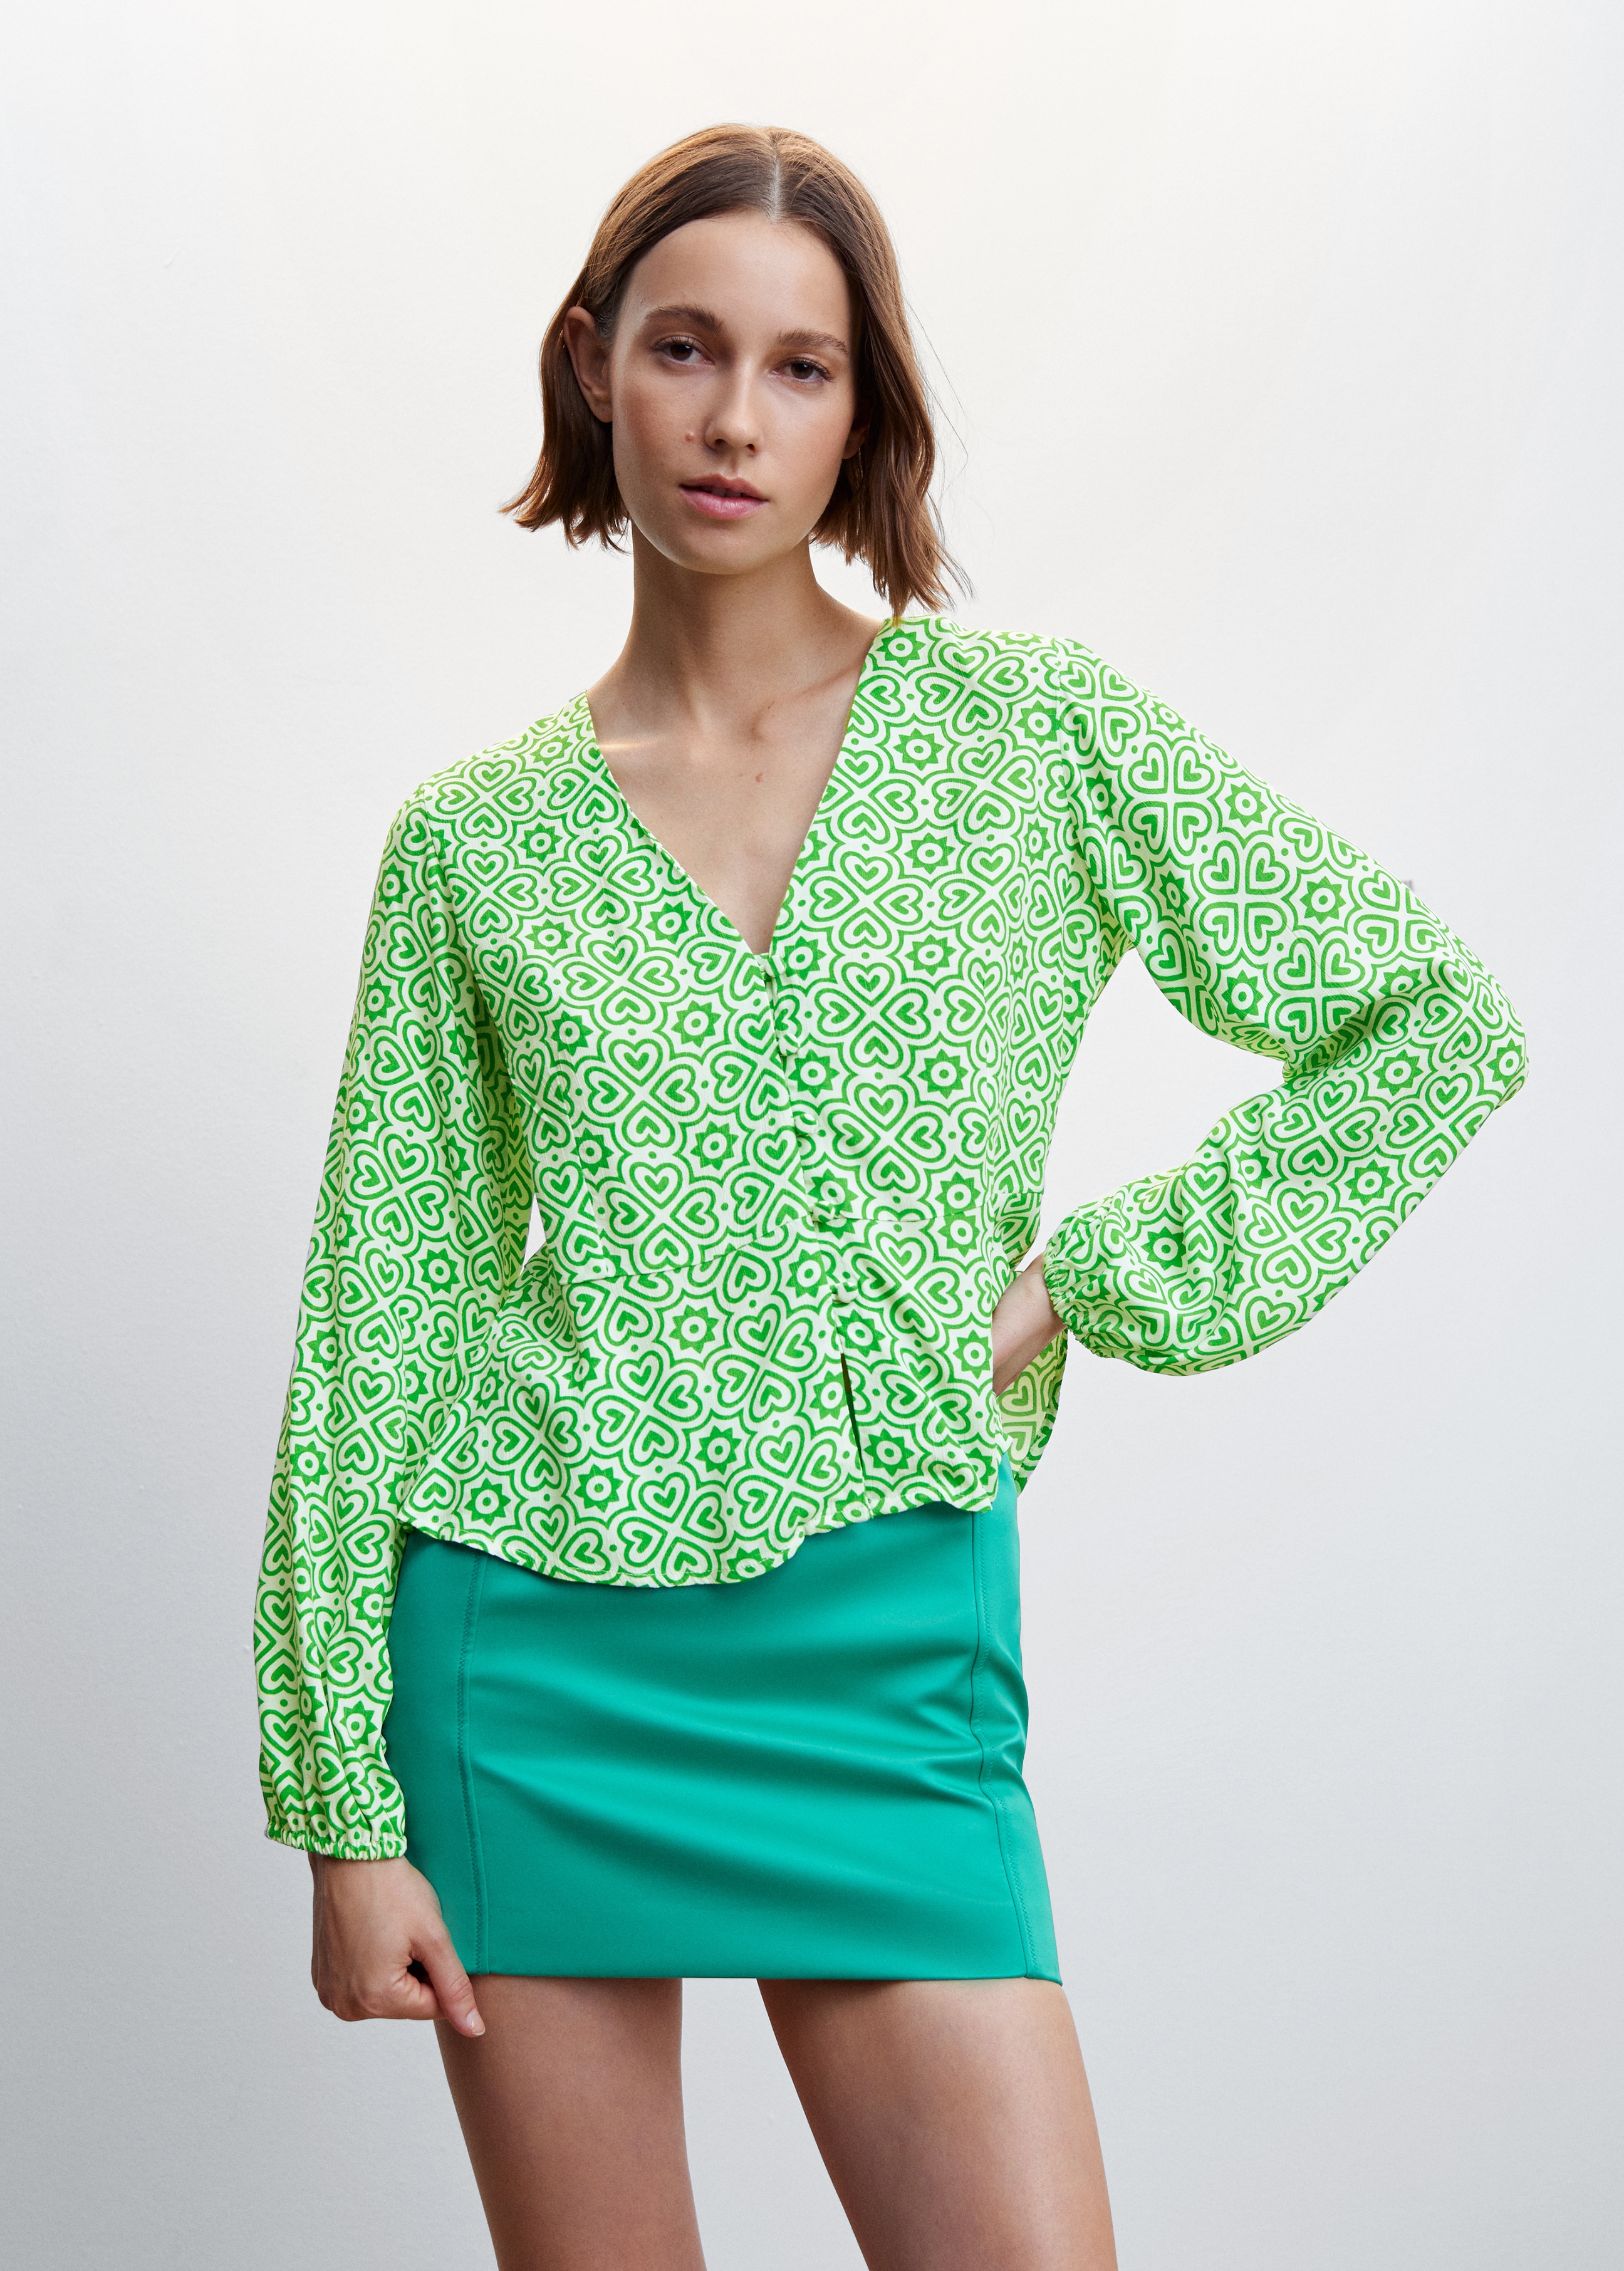 Geometric-print blouse - Medium plane